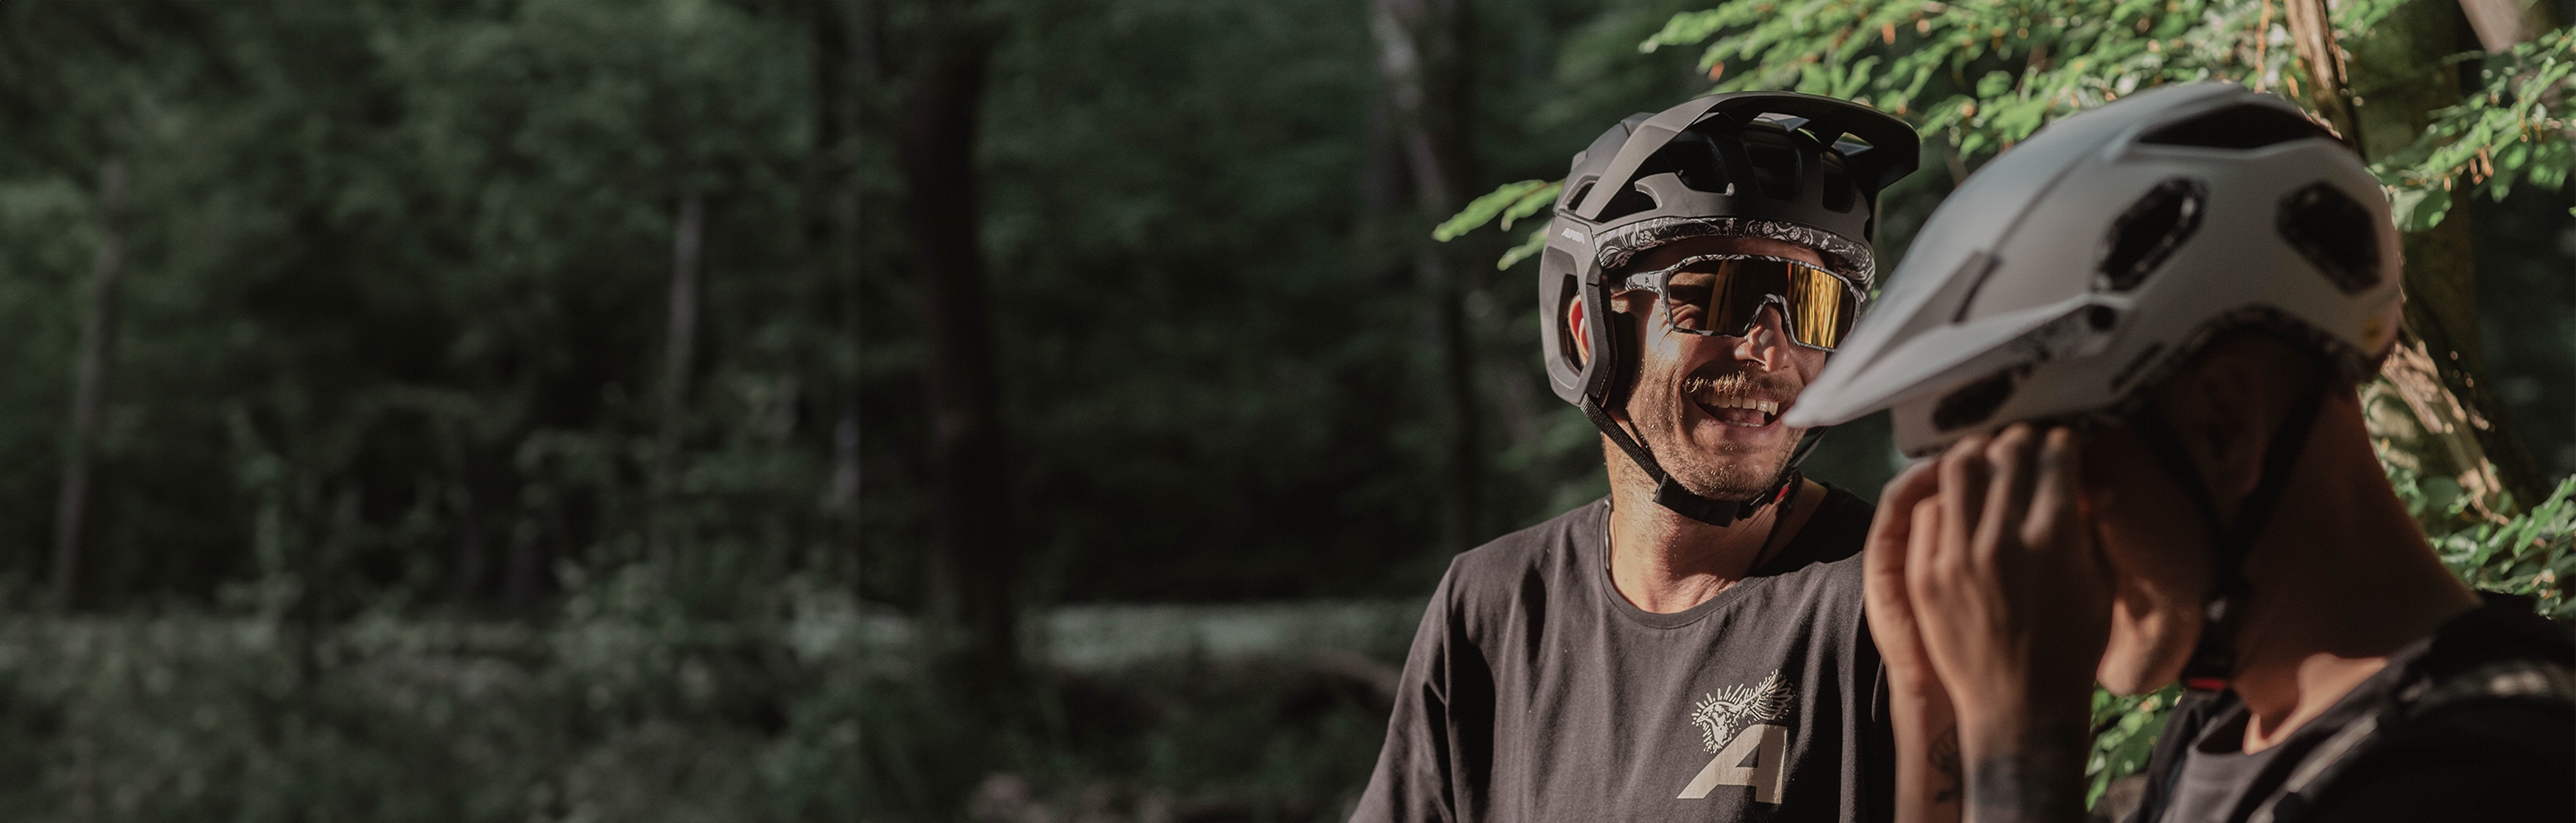 Alpina Sports – Bike Helmets & Sports Eyewear